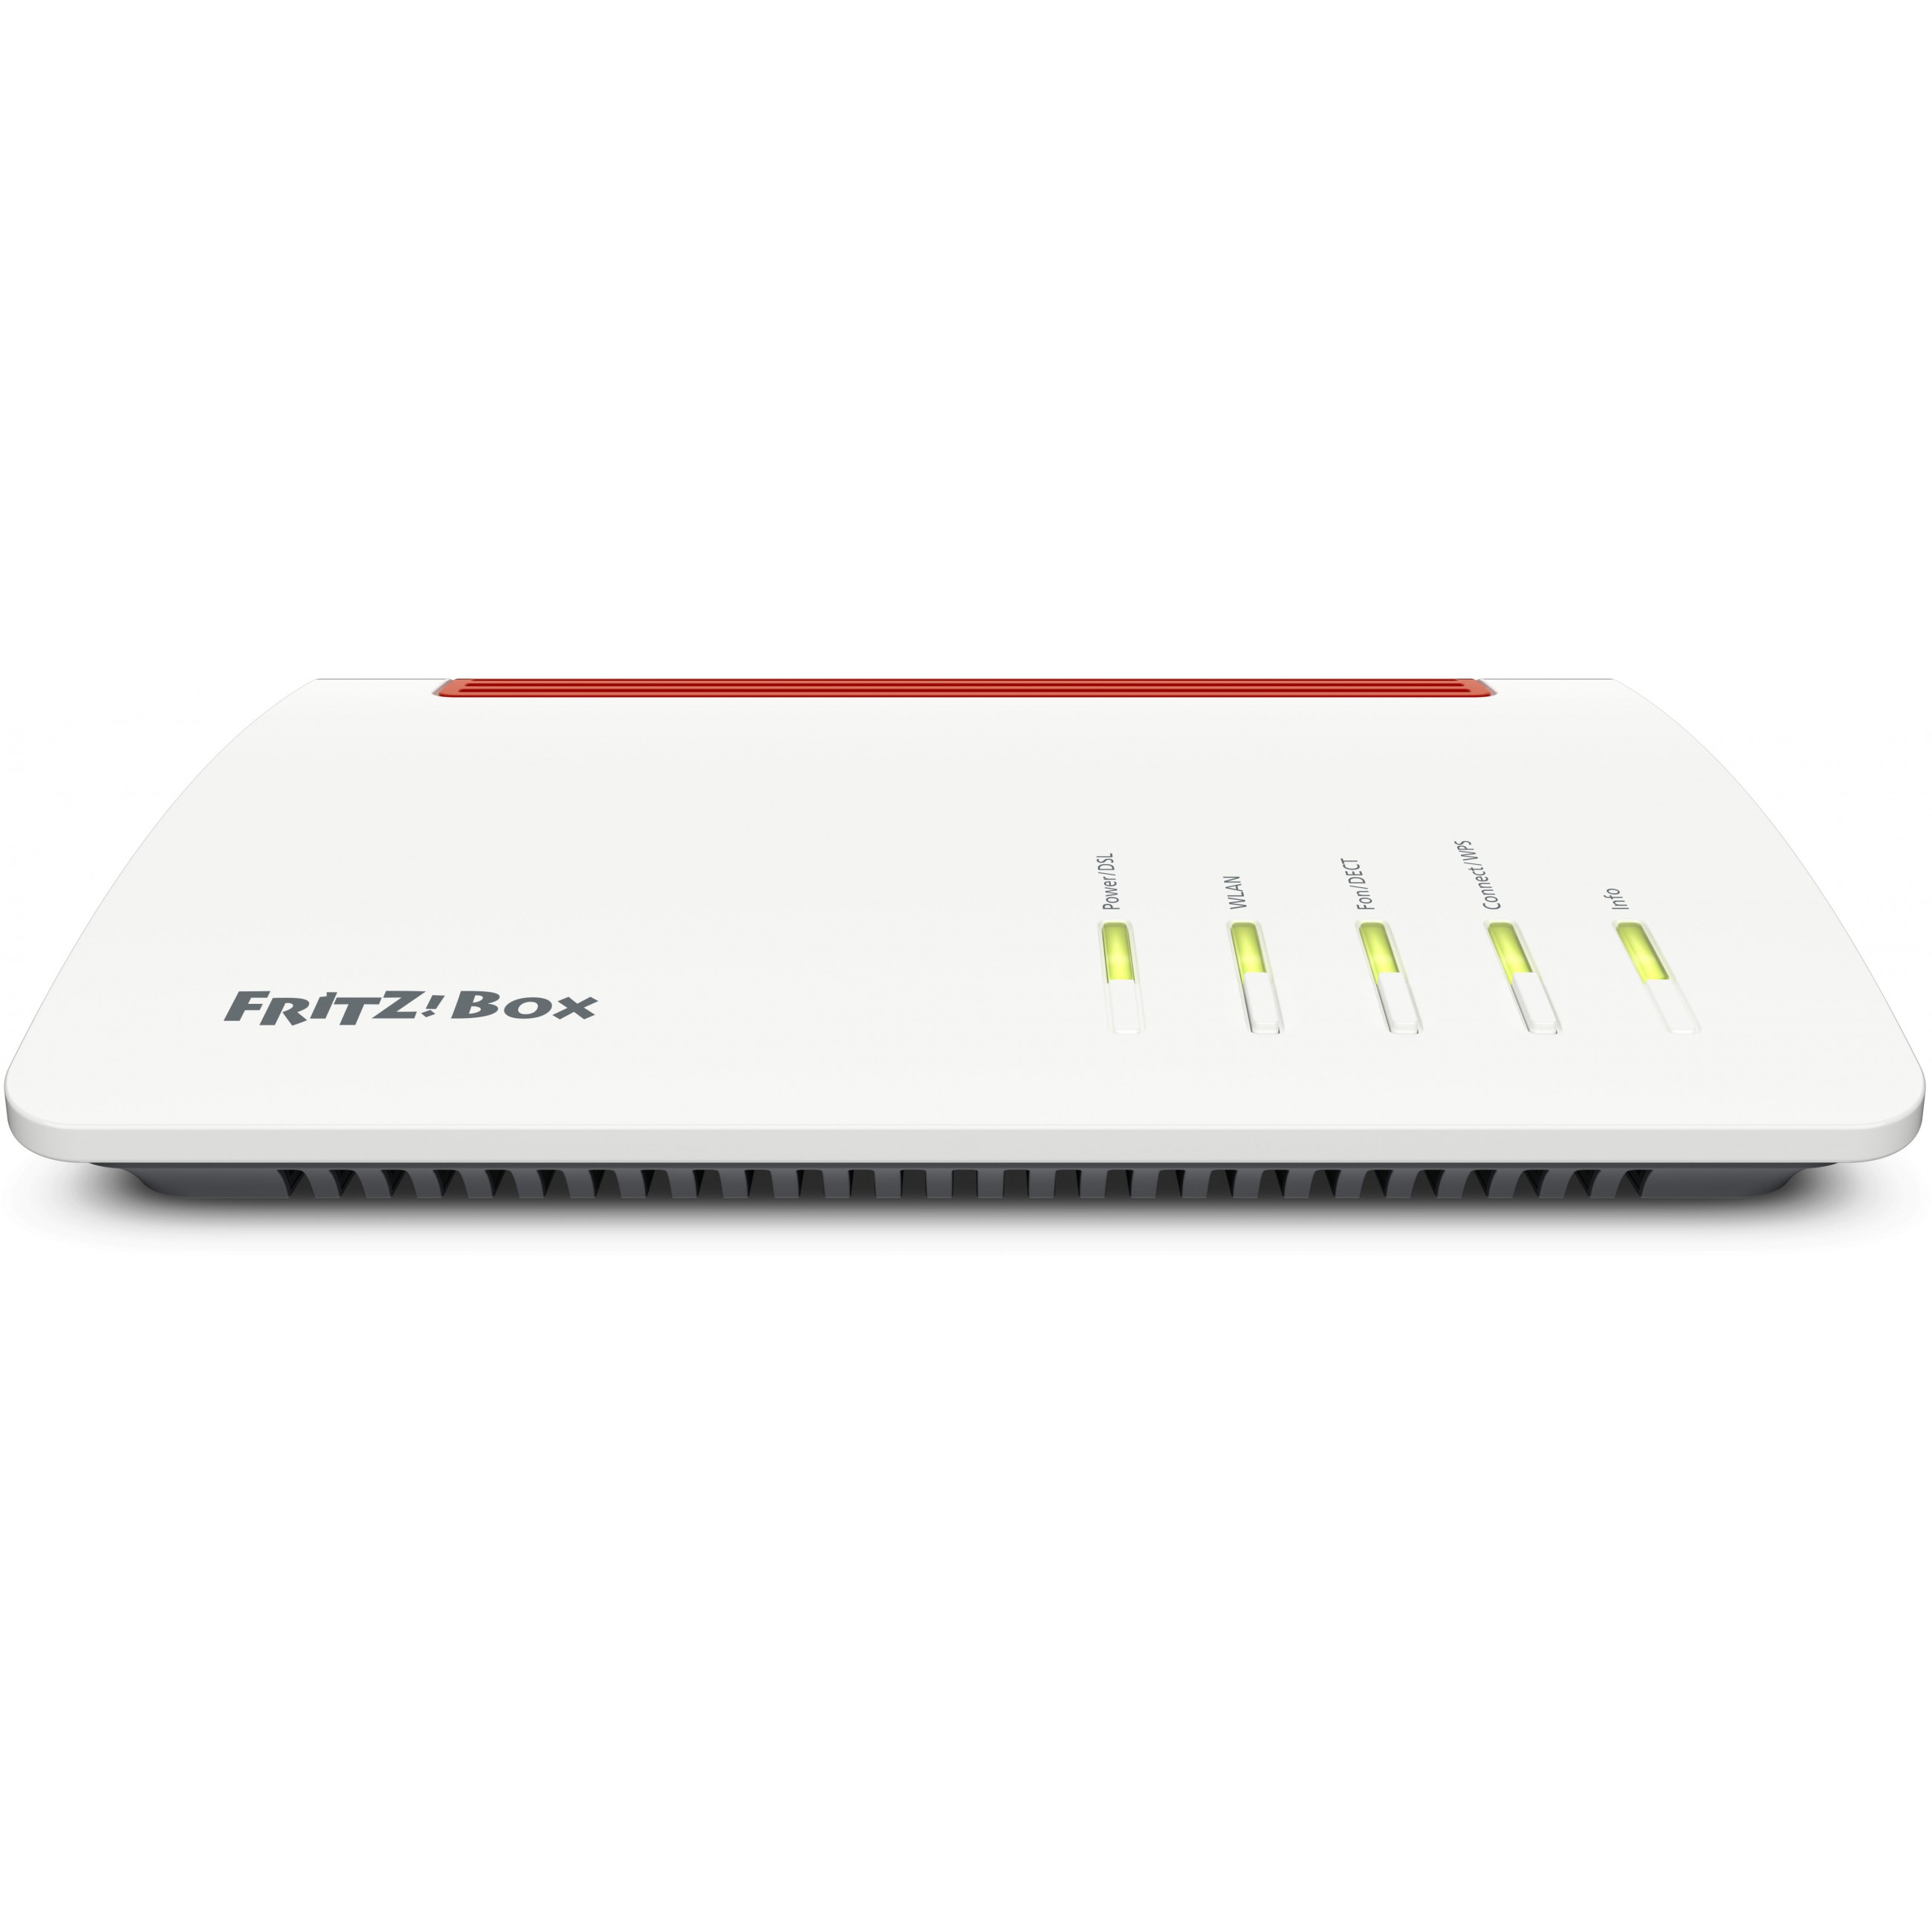 FRITZ!Box 7590 wireless router - 20002784